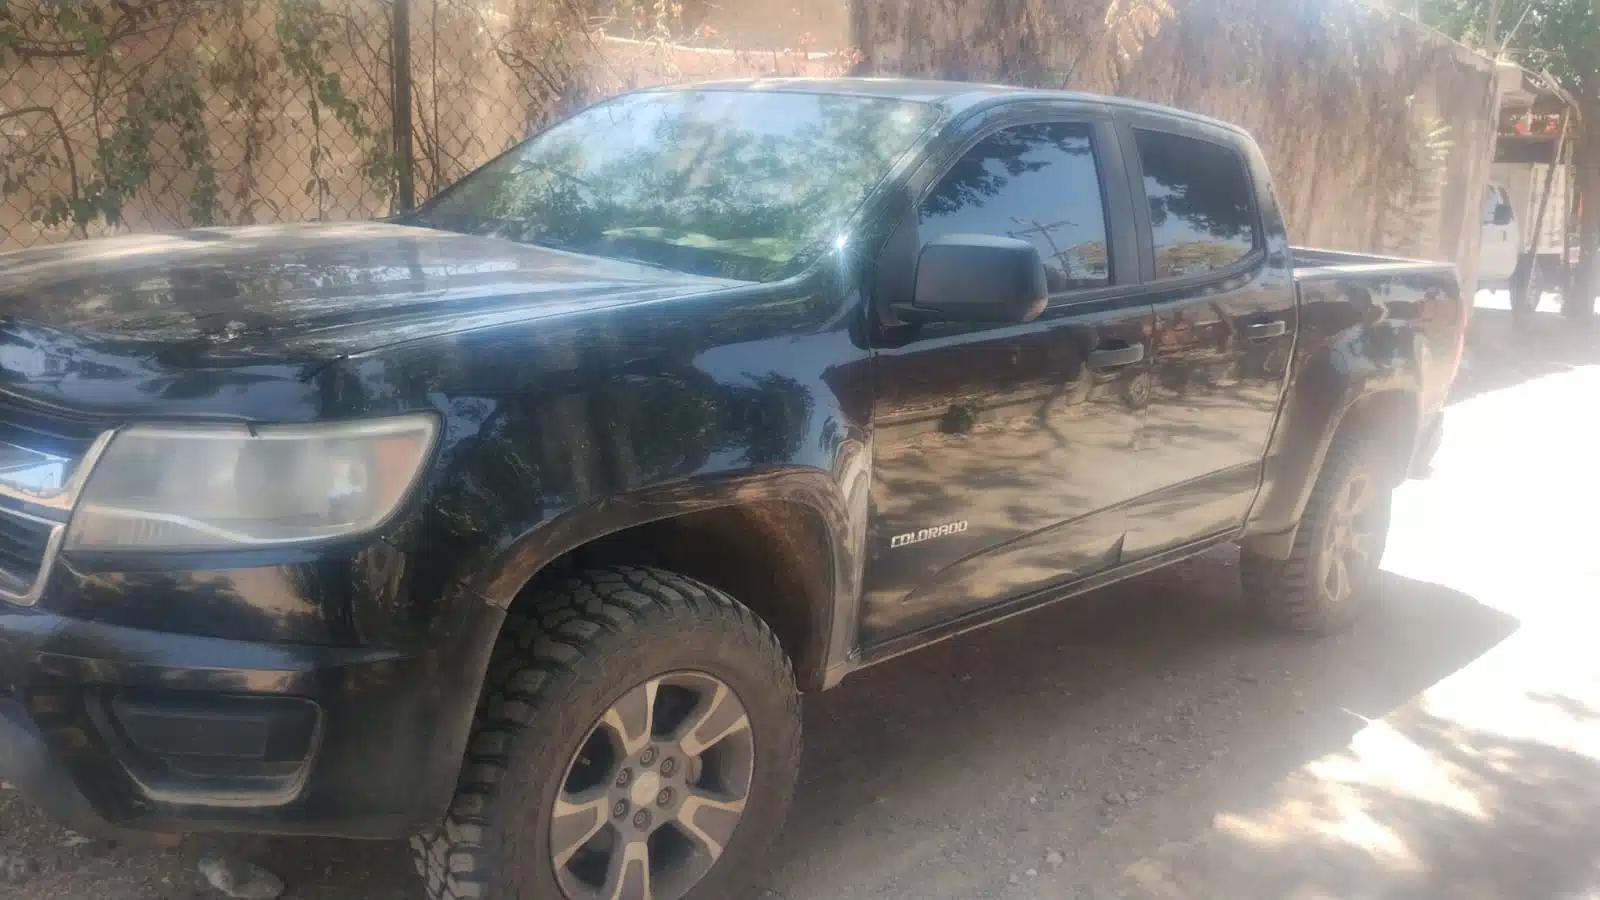 Camioneta tipo pick up de la marca Chevrolet asegurada en Culiacán